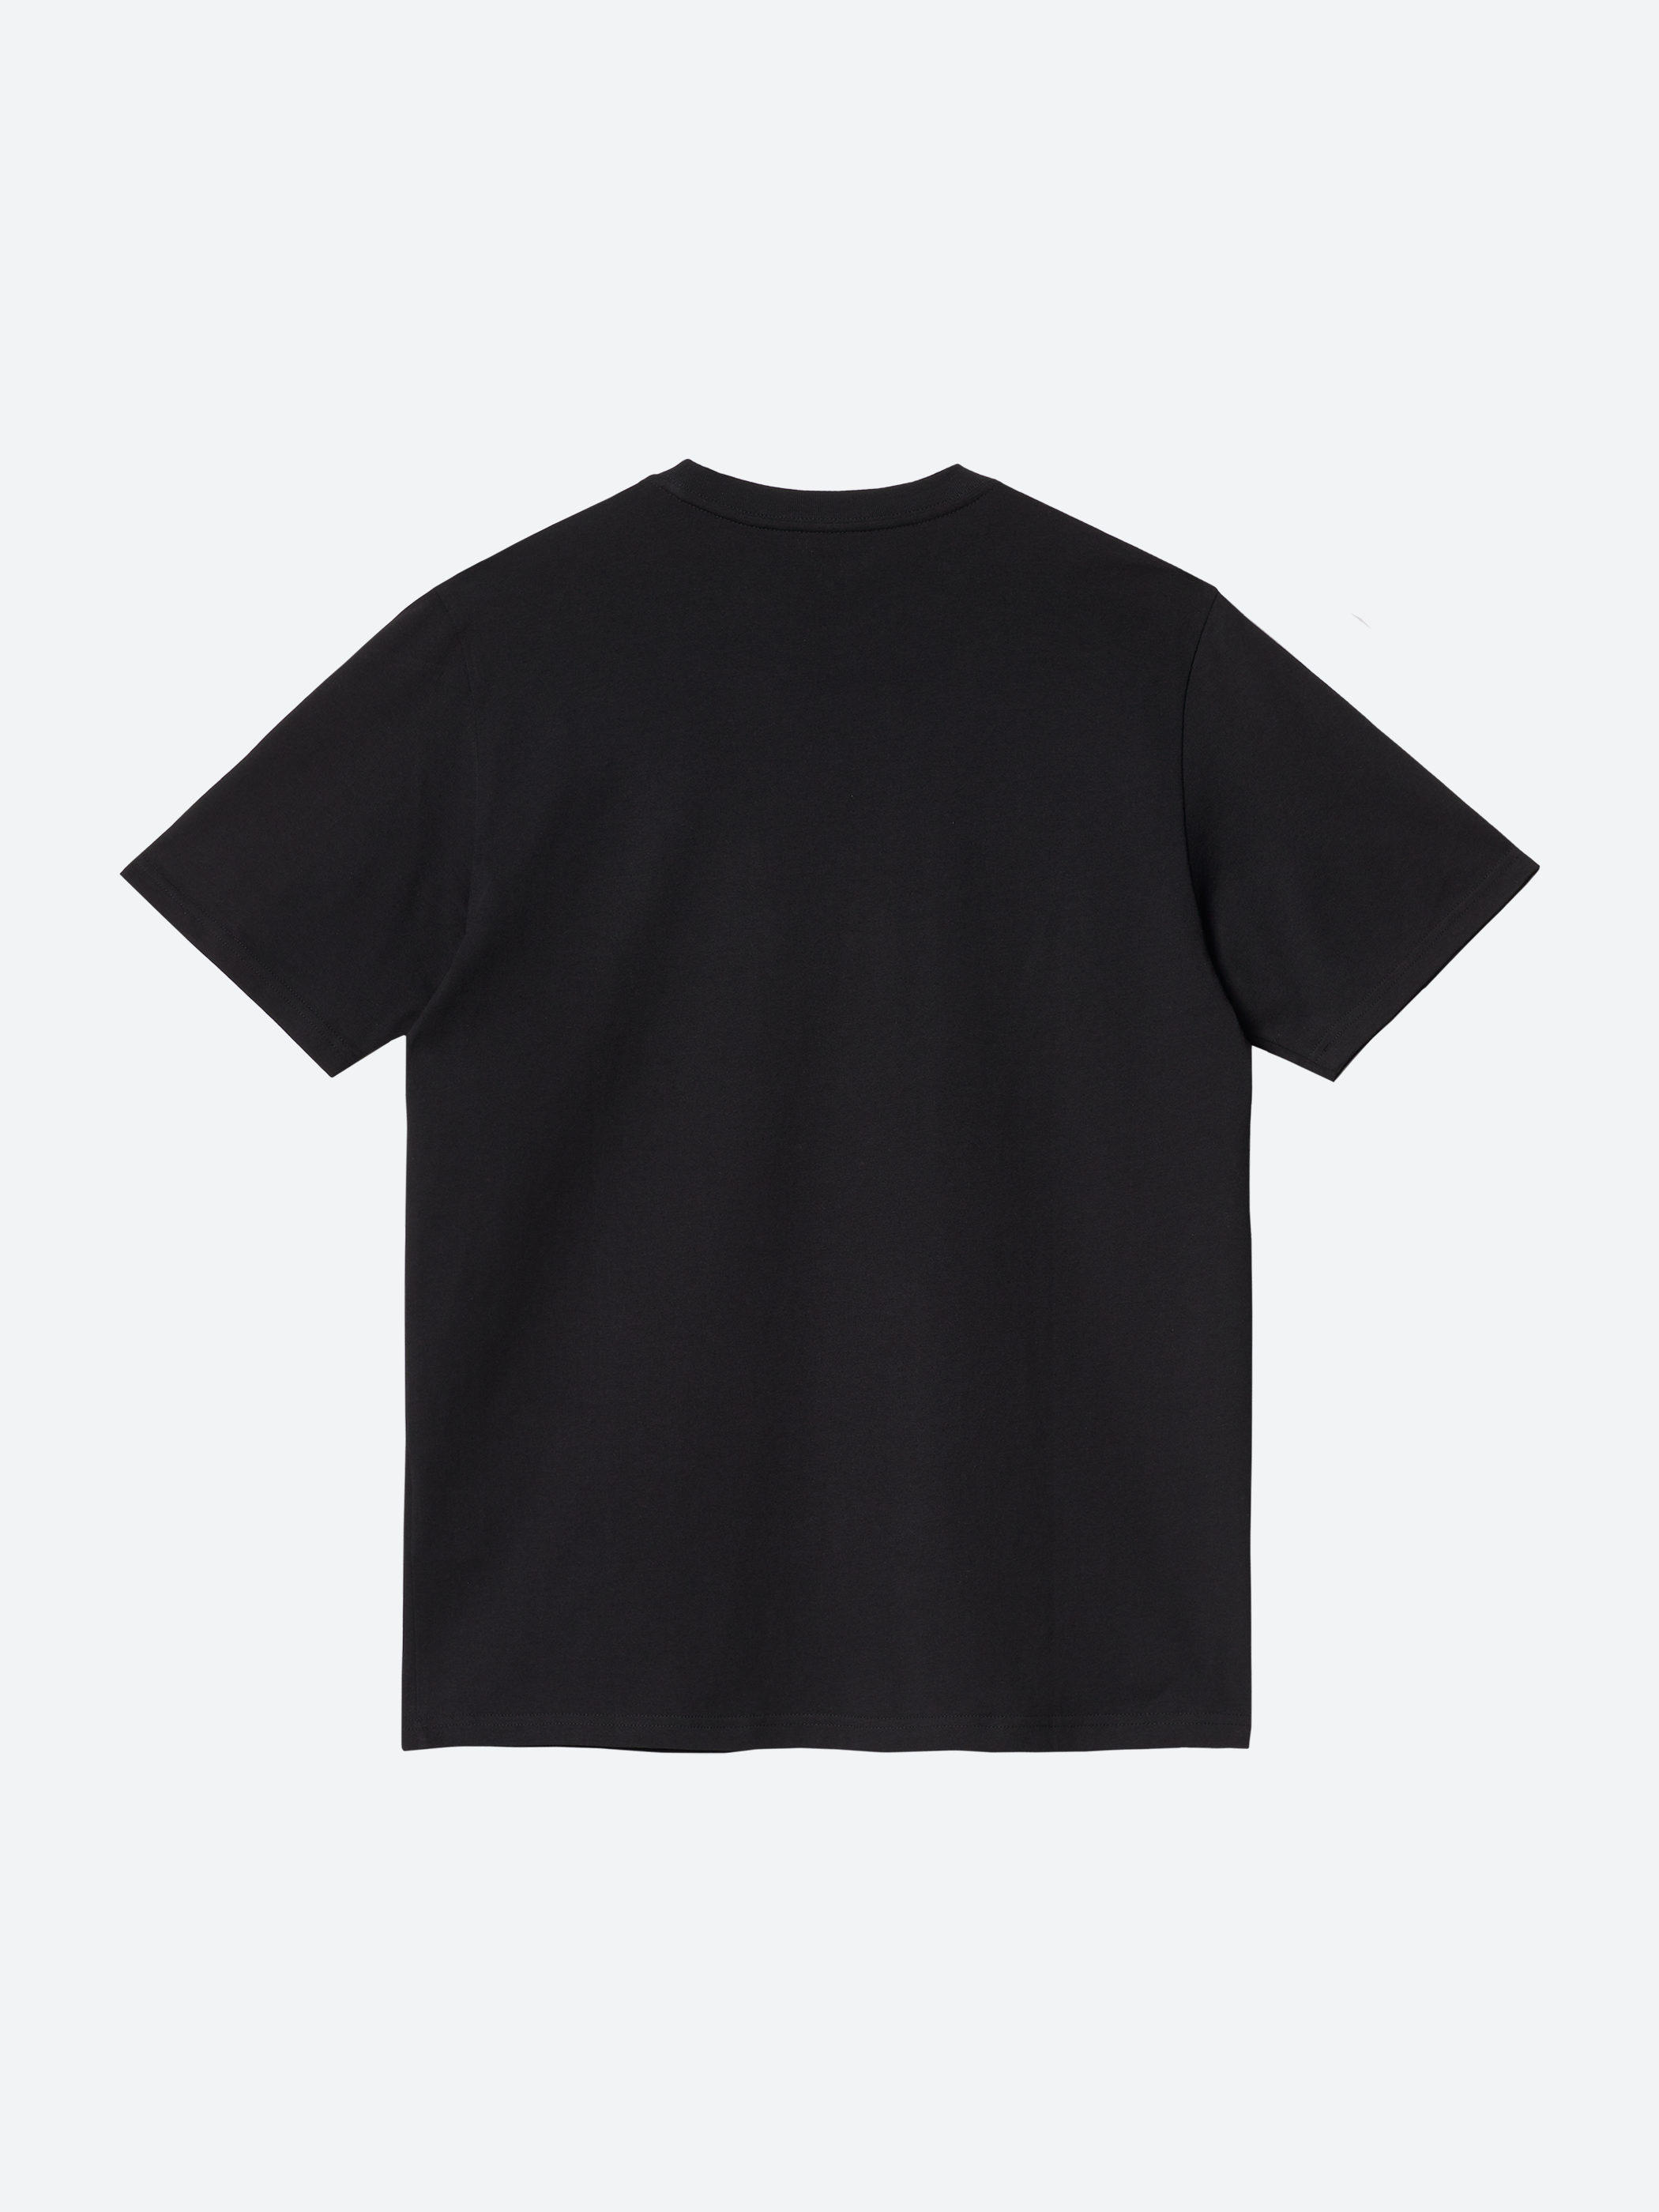 S/S Pocket T-Shirt